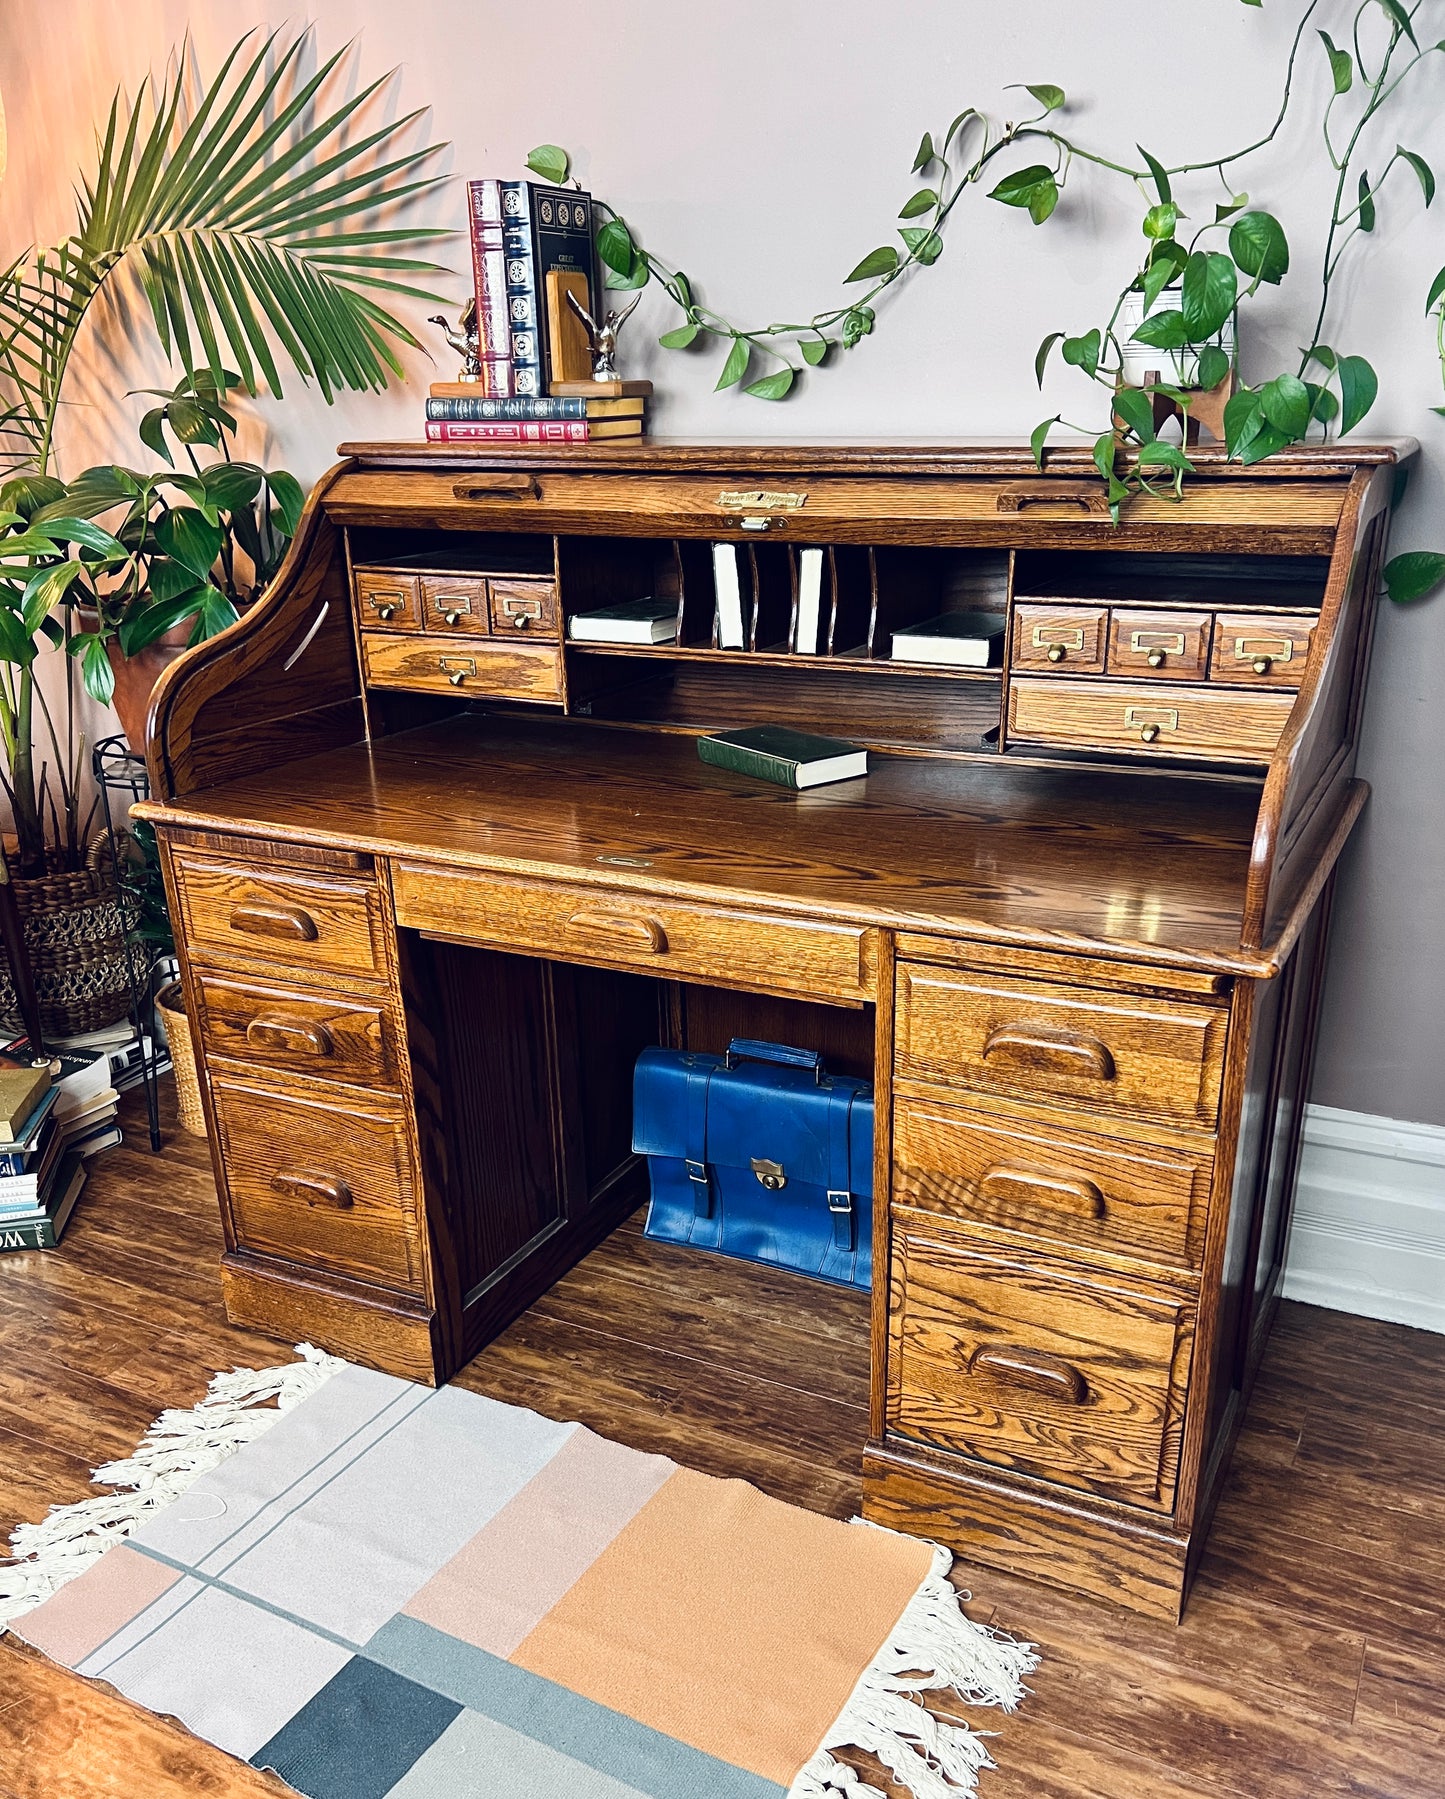 The Winslow Rolltop Desk